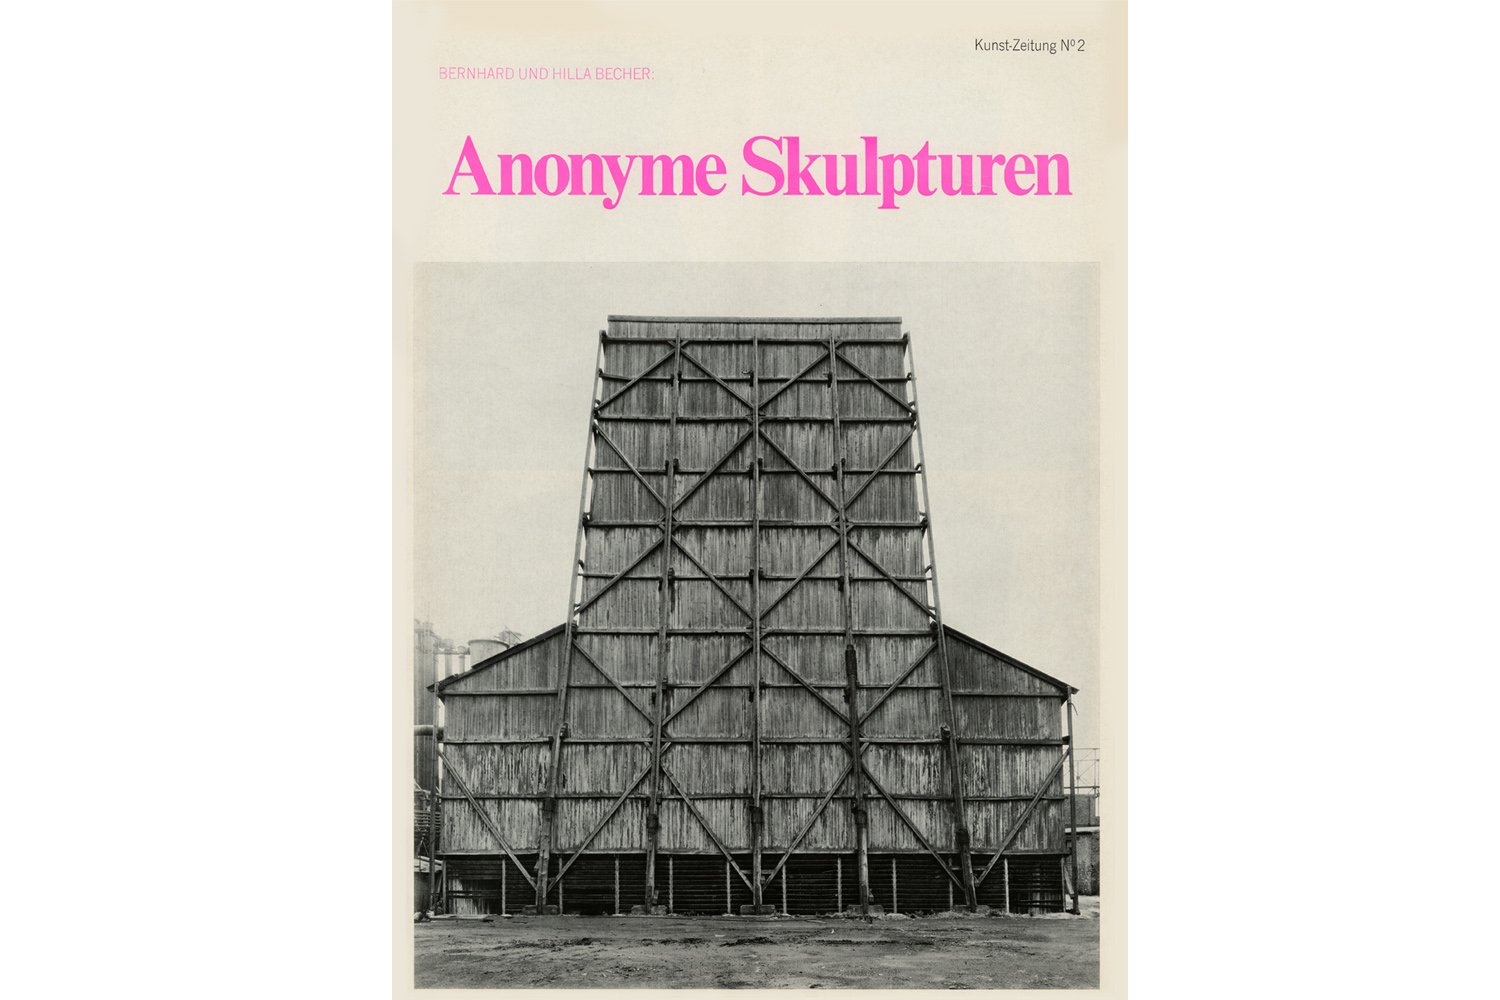 Image: Magazine cover, Anonyme Skulpturen